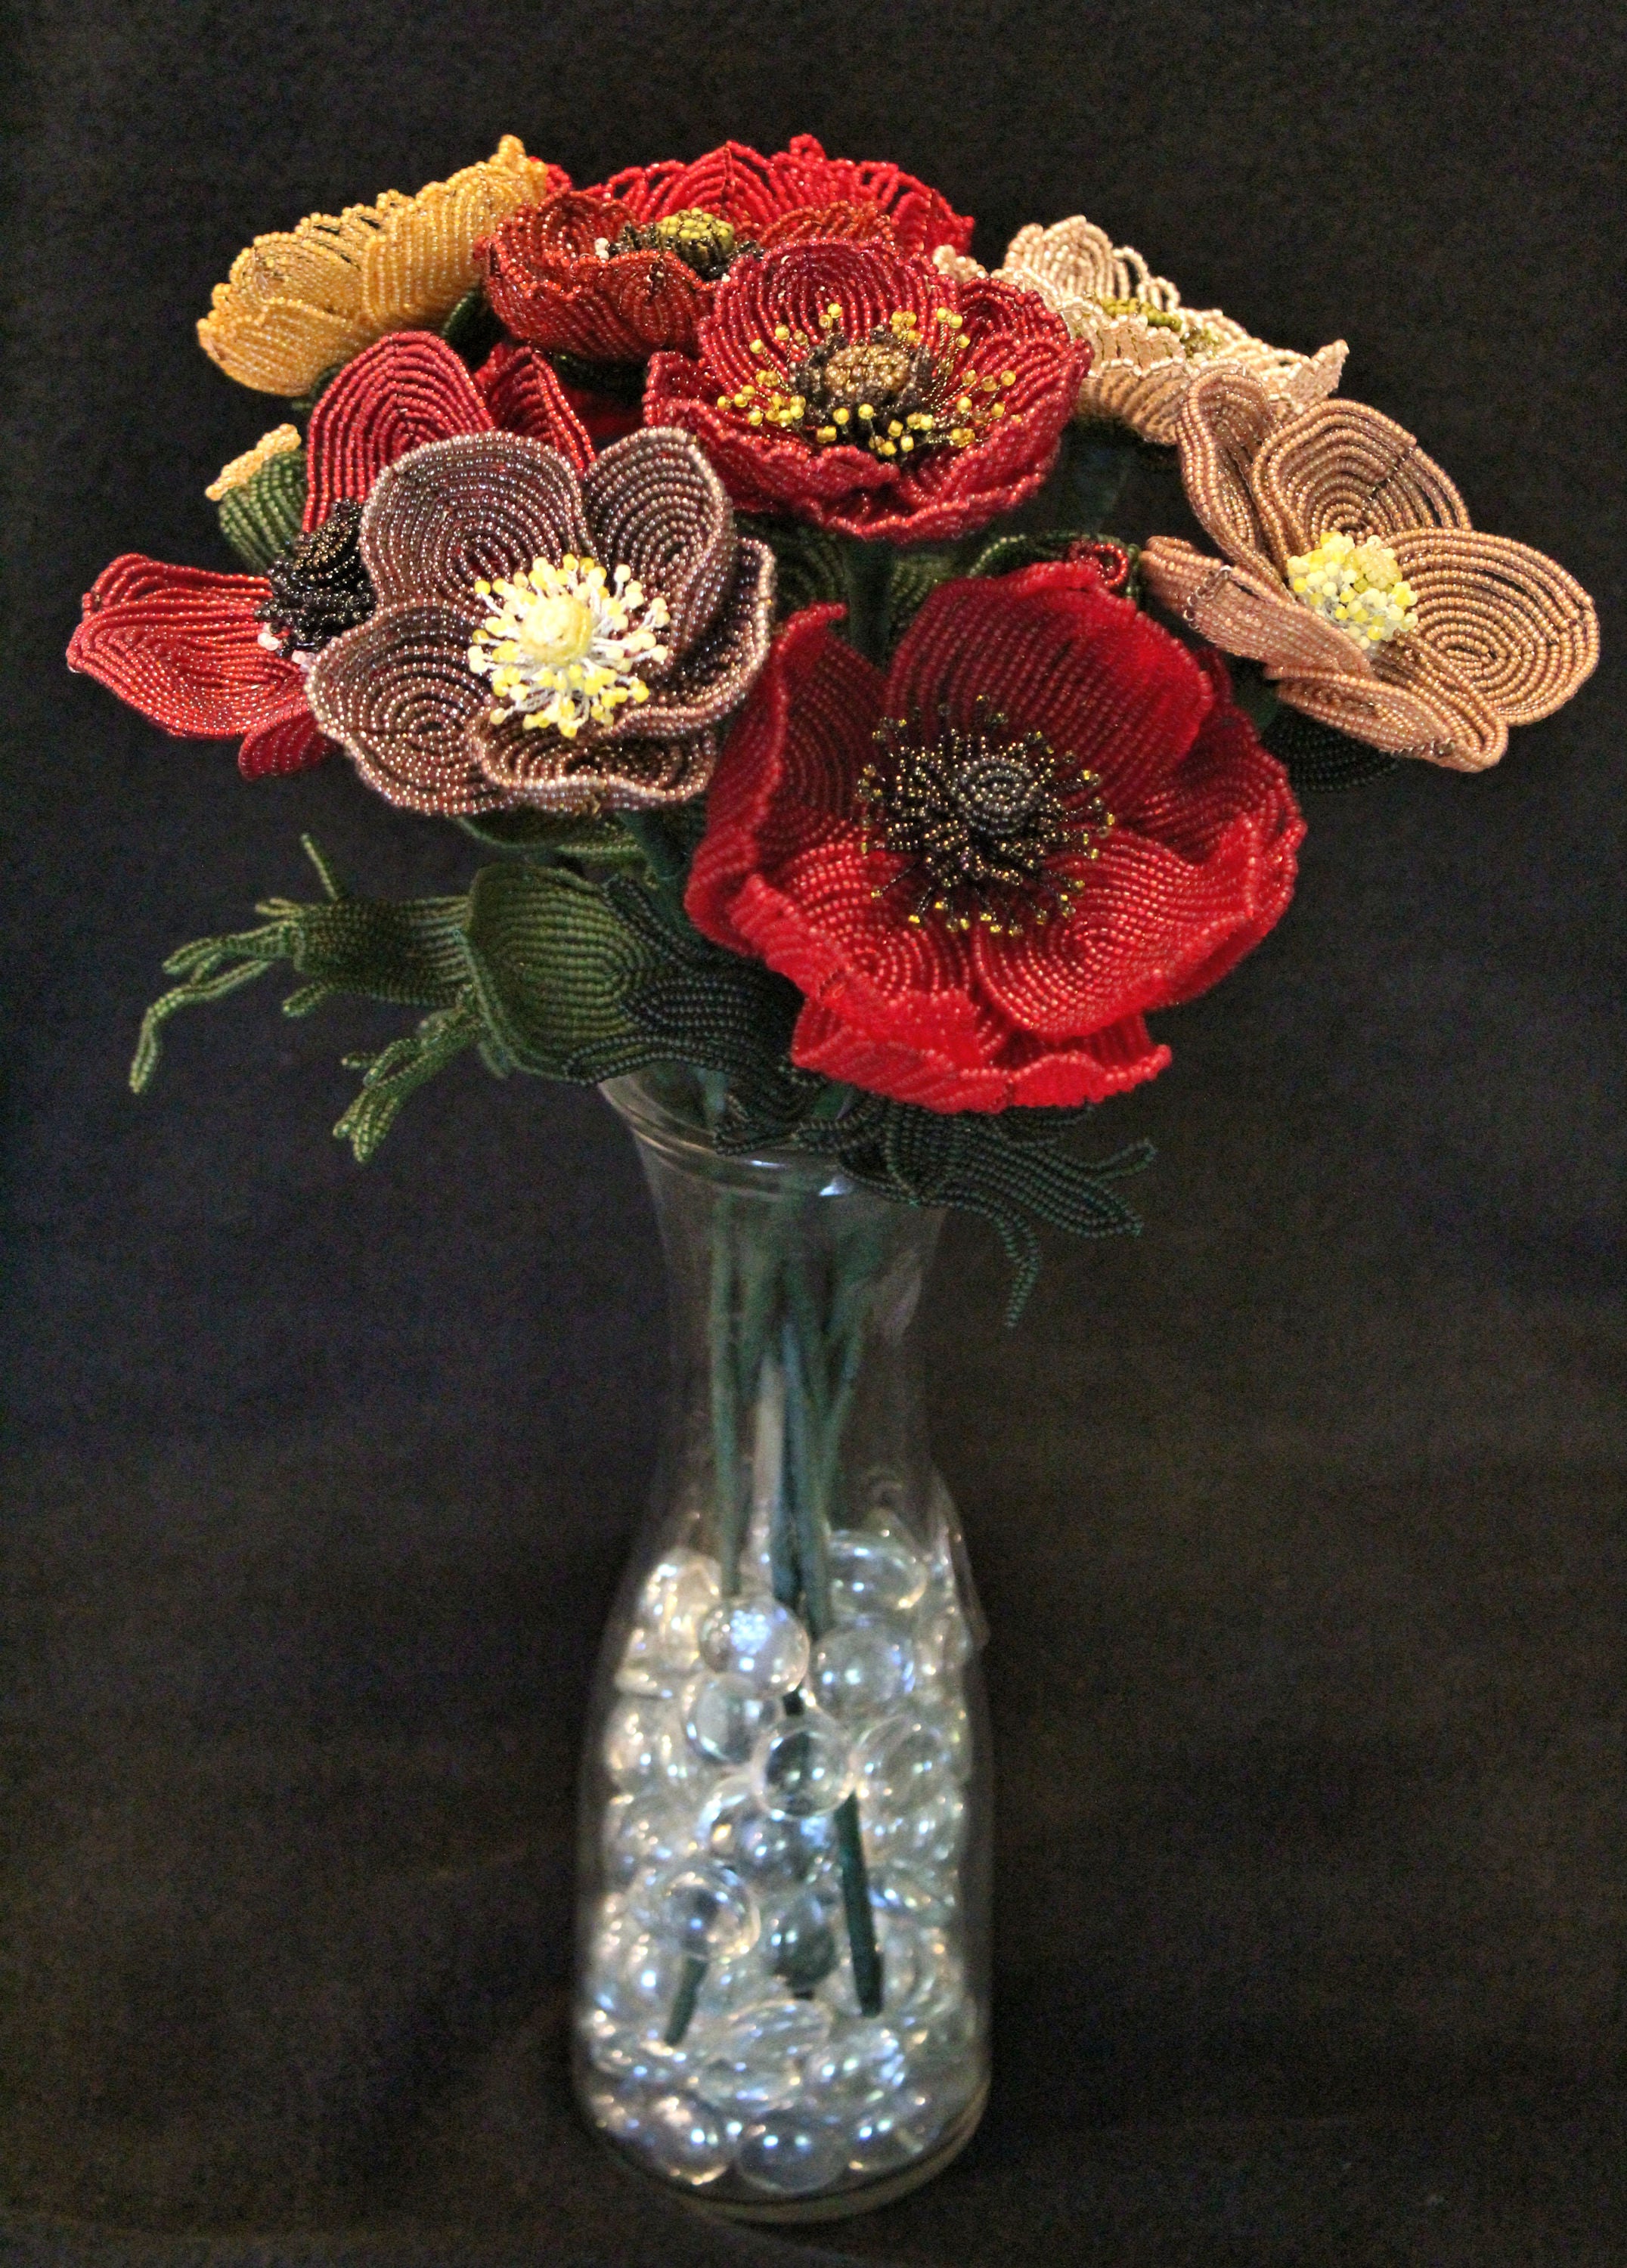 Extravagant Poppy Bouquet - SOLD